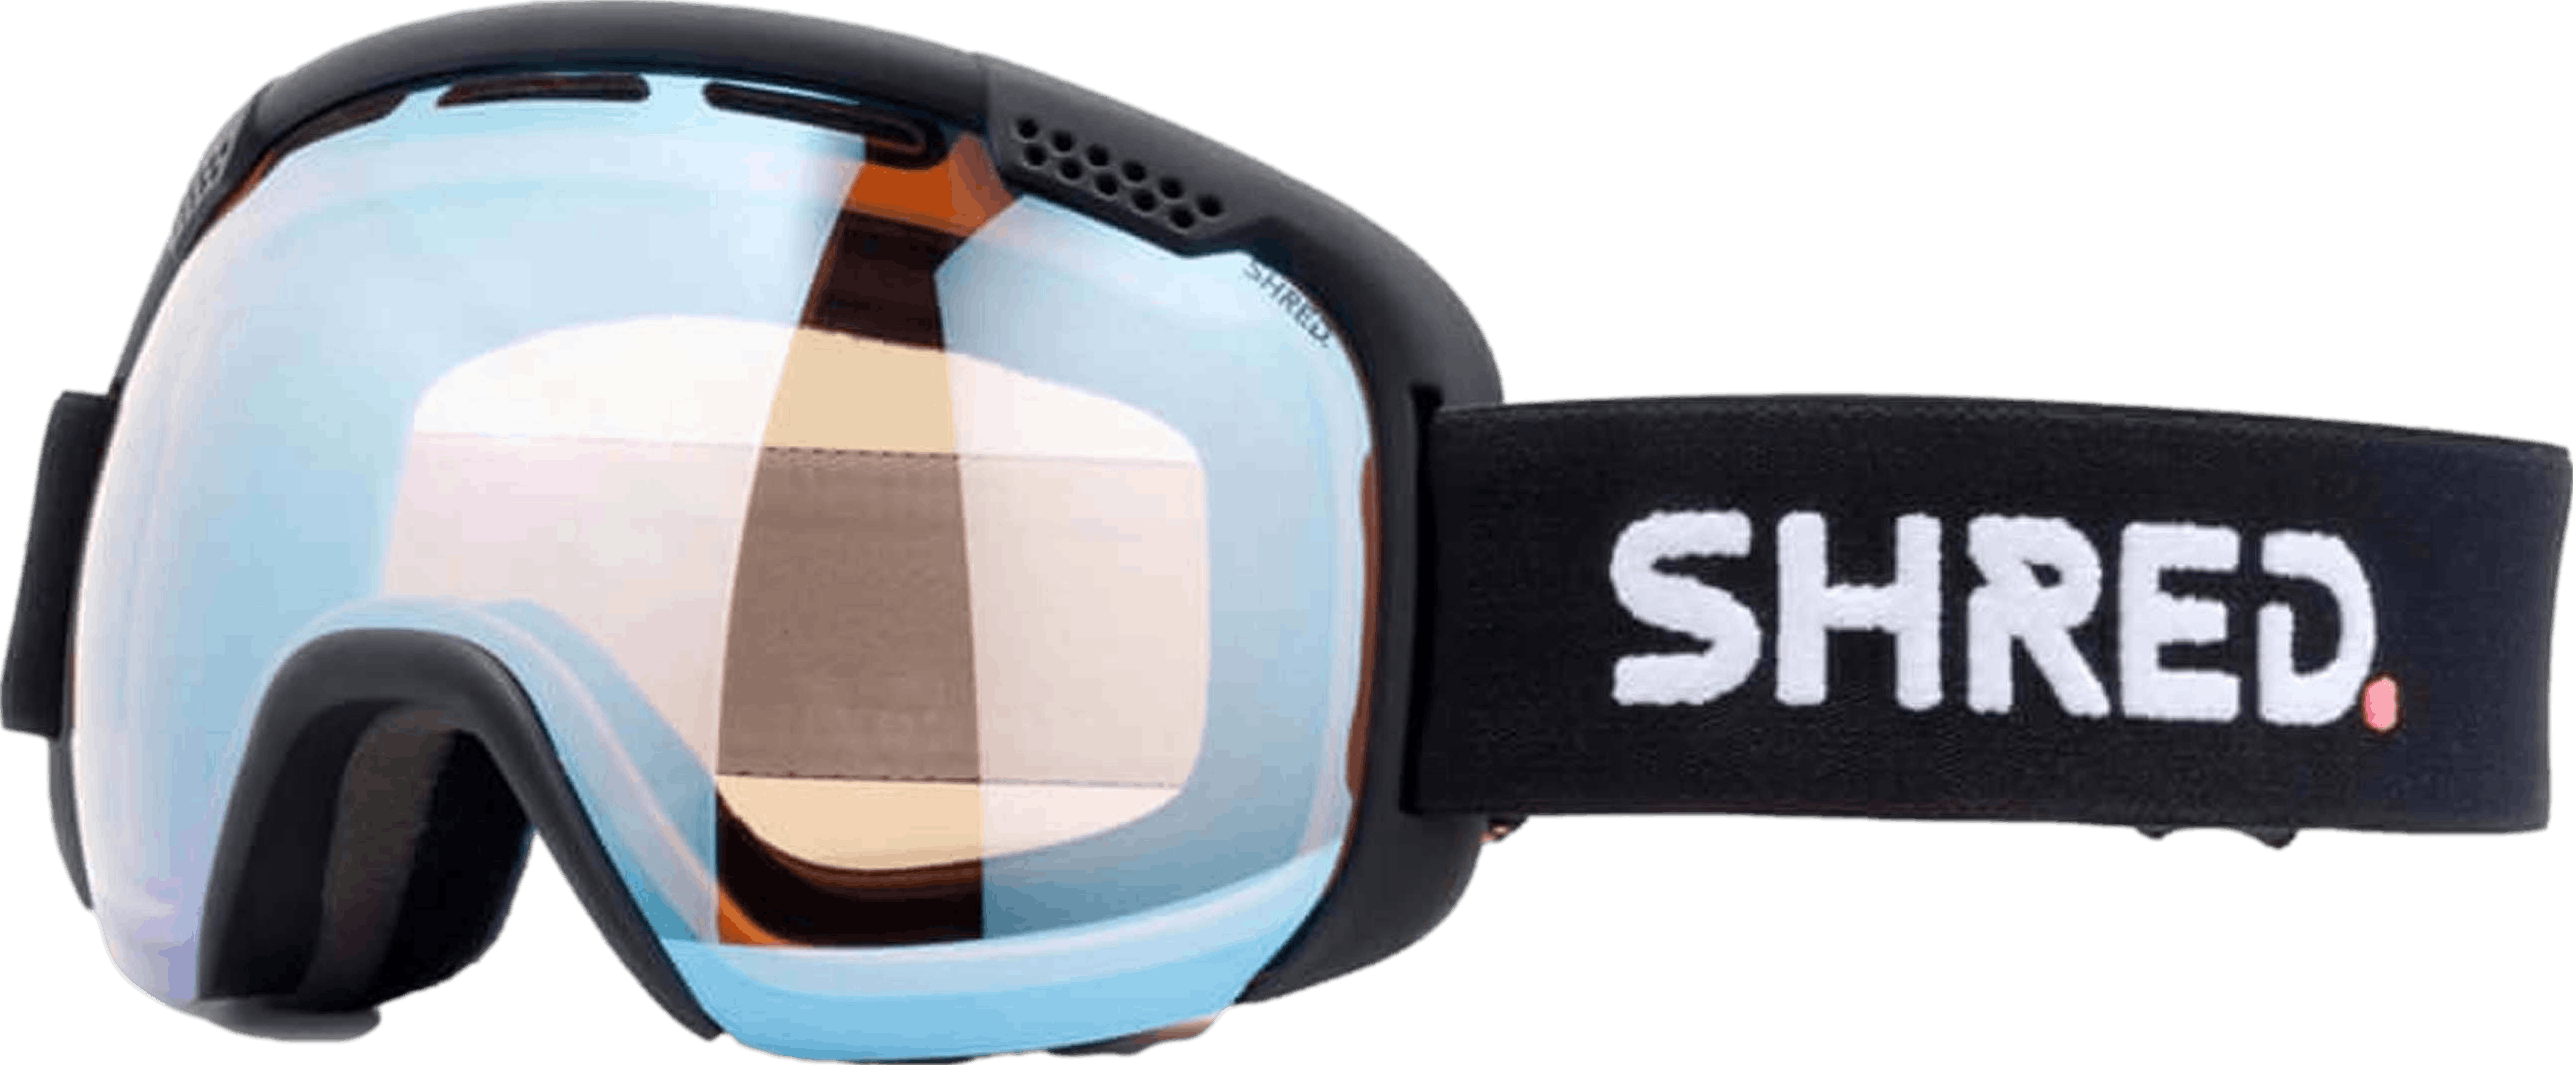 Shred Smartefy Goggles